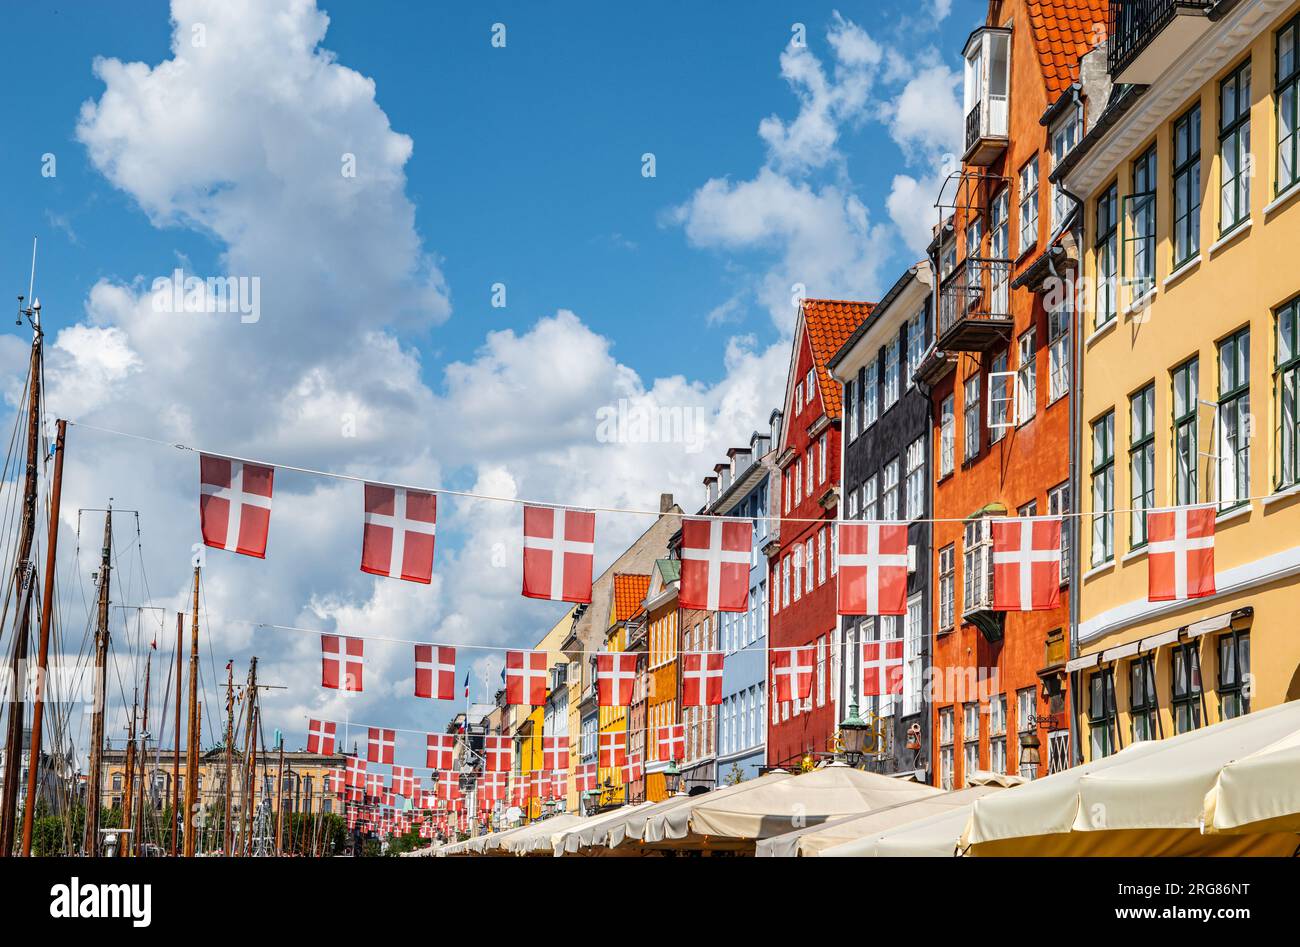 Dänische Flaggen und farbenfrohe Gebäude in Nyhavn, Kopenhagen in Dänemark. Stockfoto